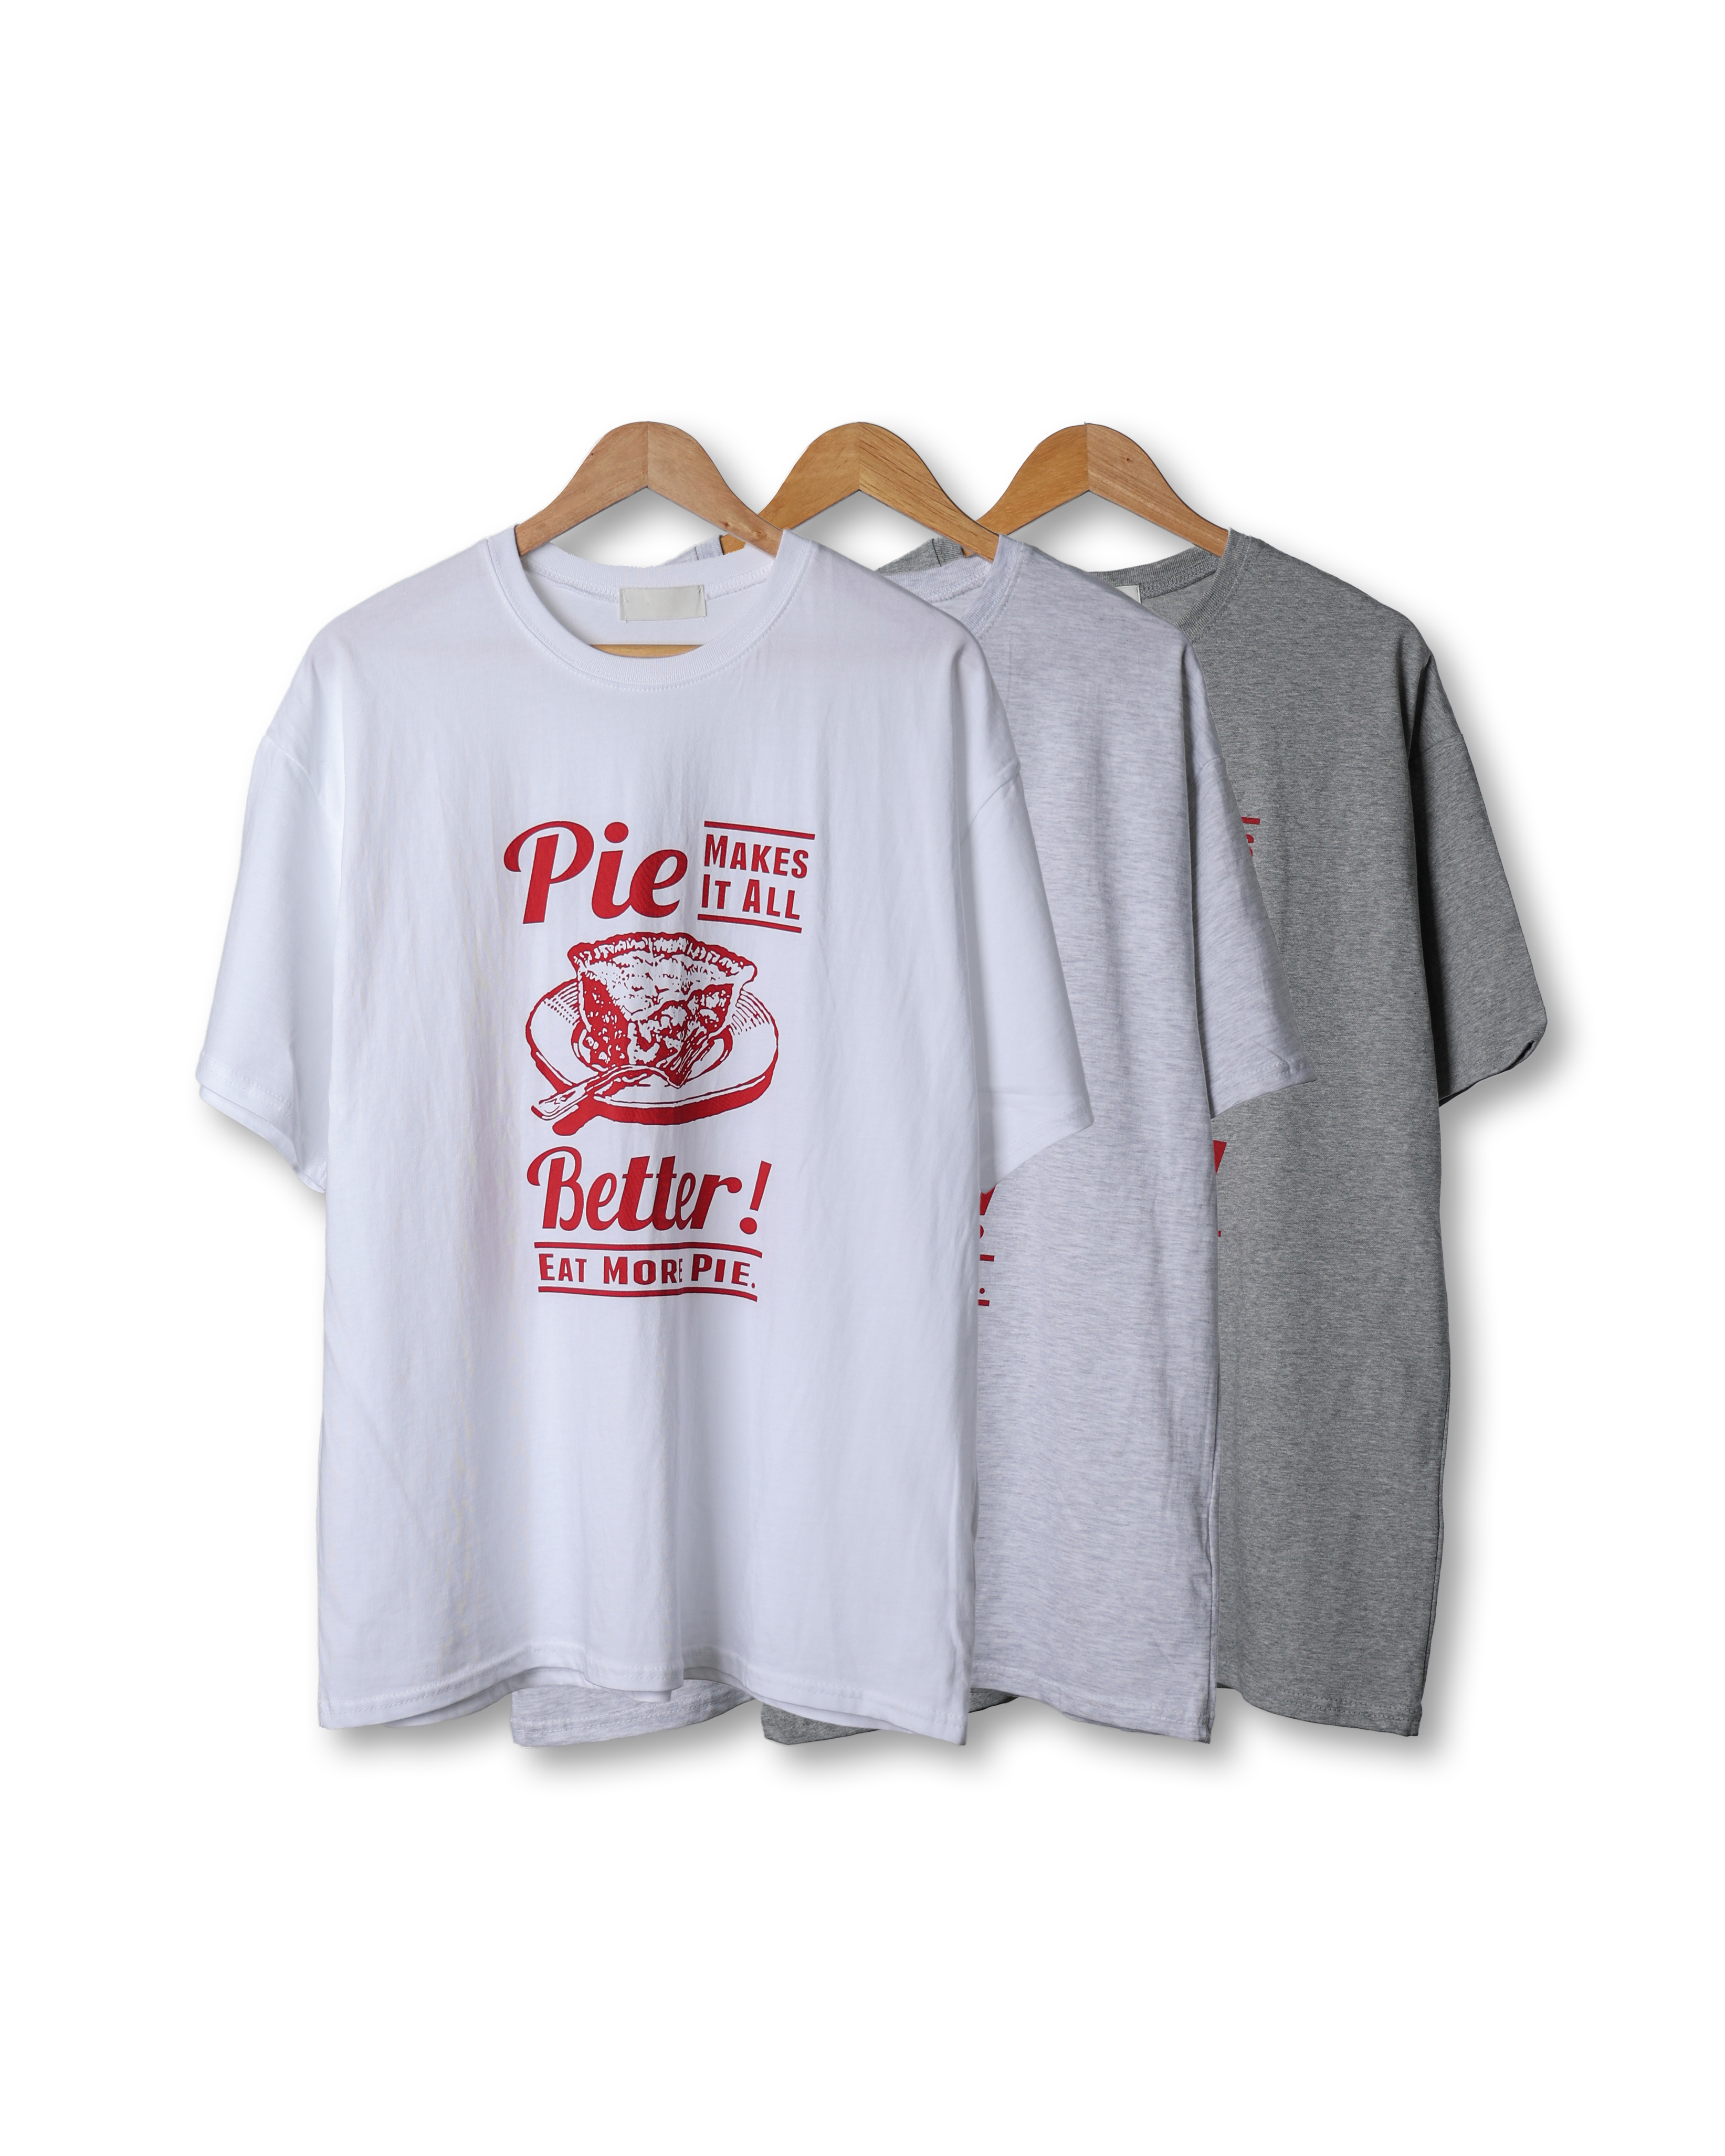 MSCO PIE BETTER Design T Shirts (Gray/Light Gray/White)